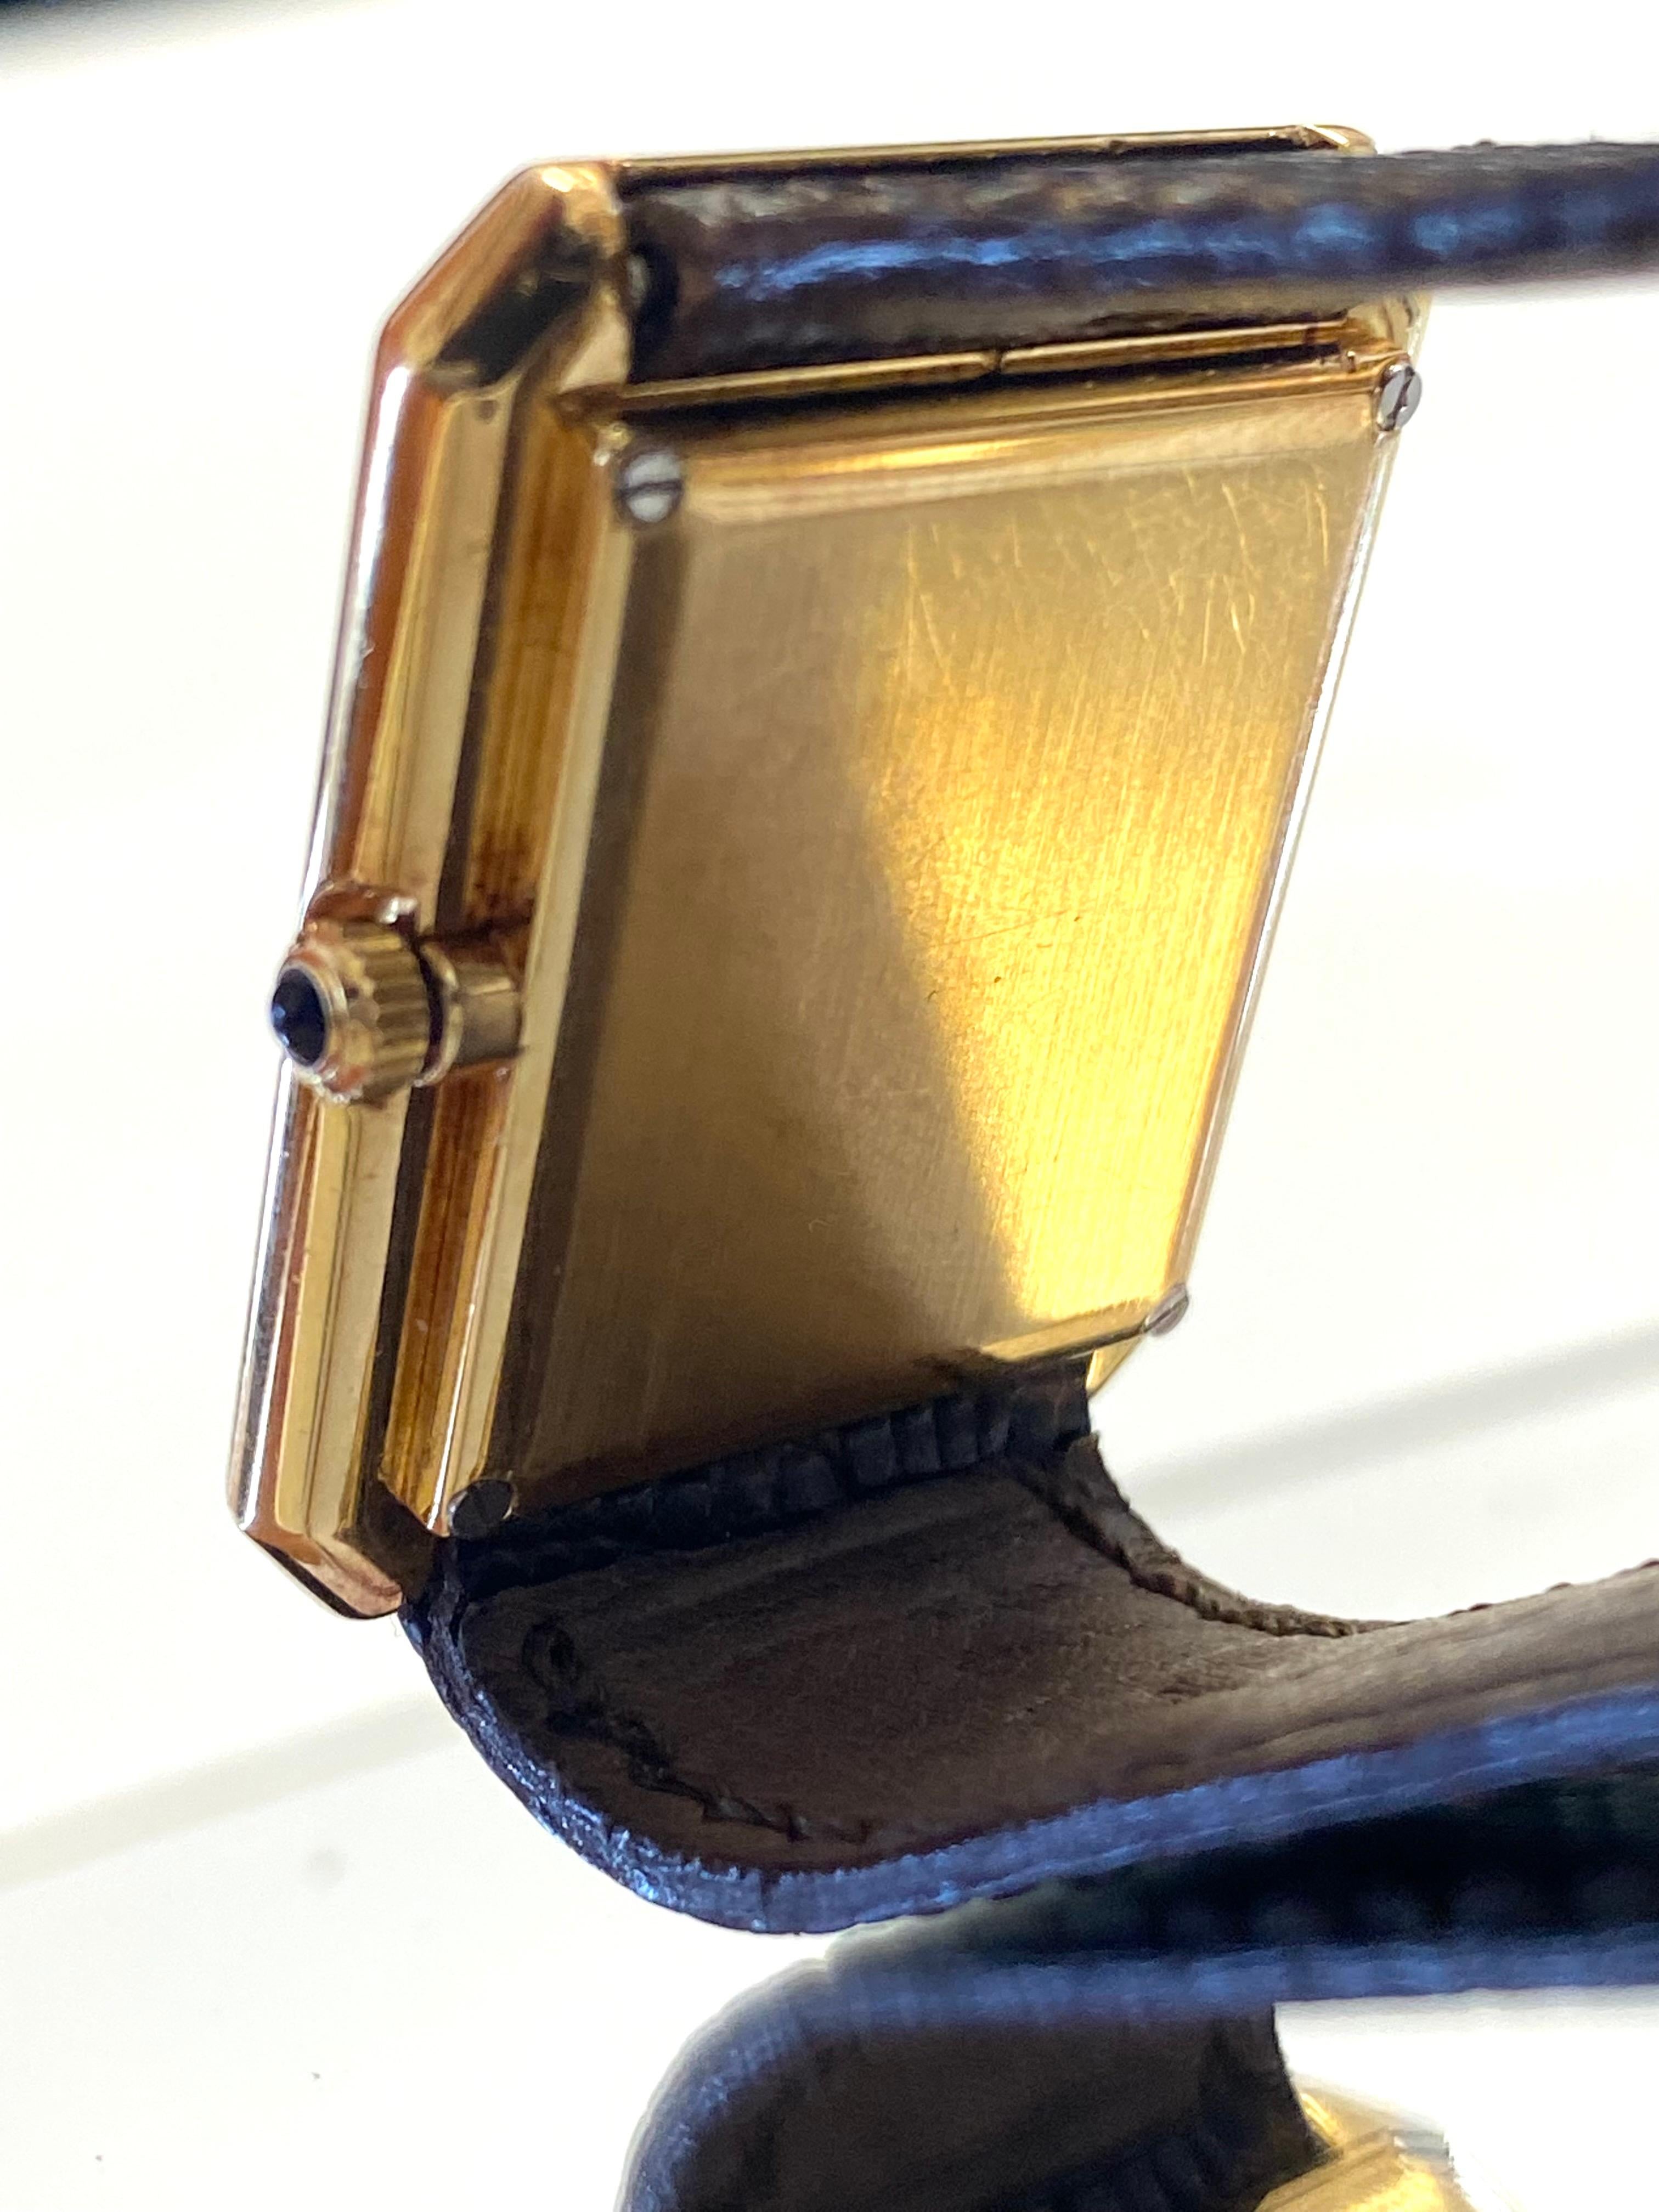 tiffany & co 18k gold watch